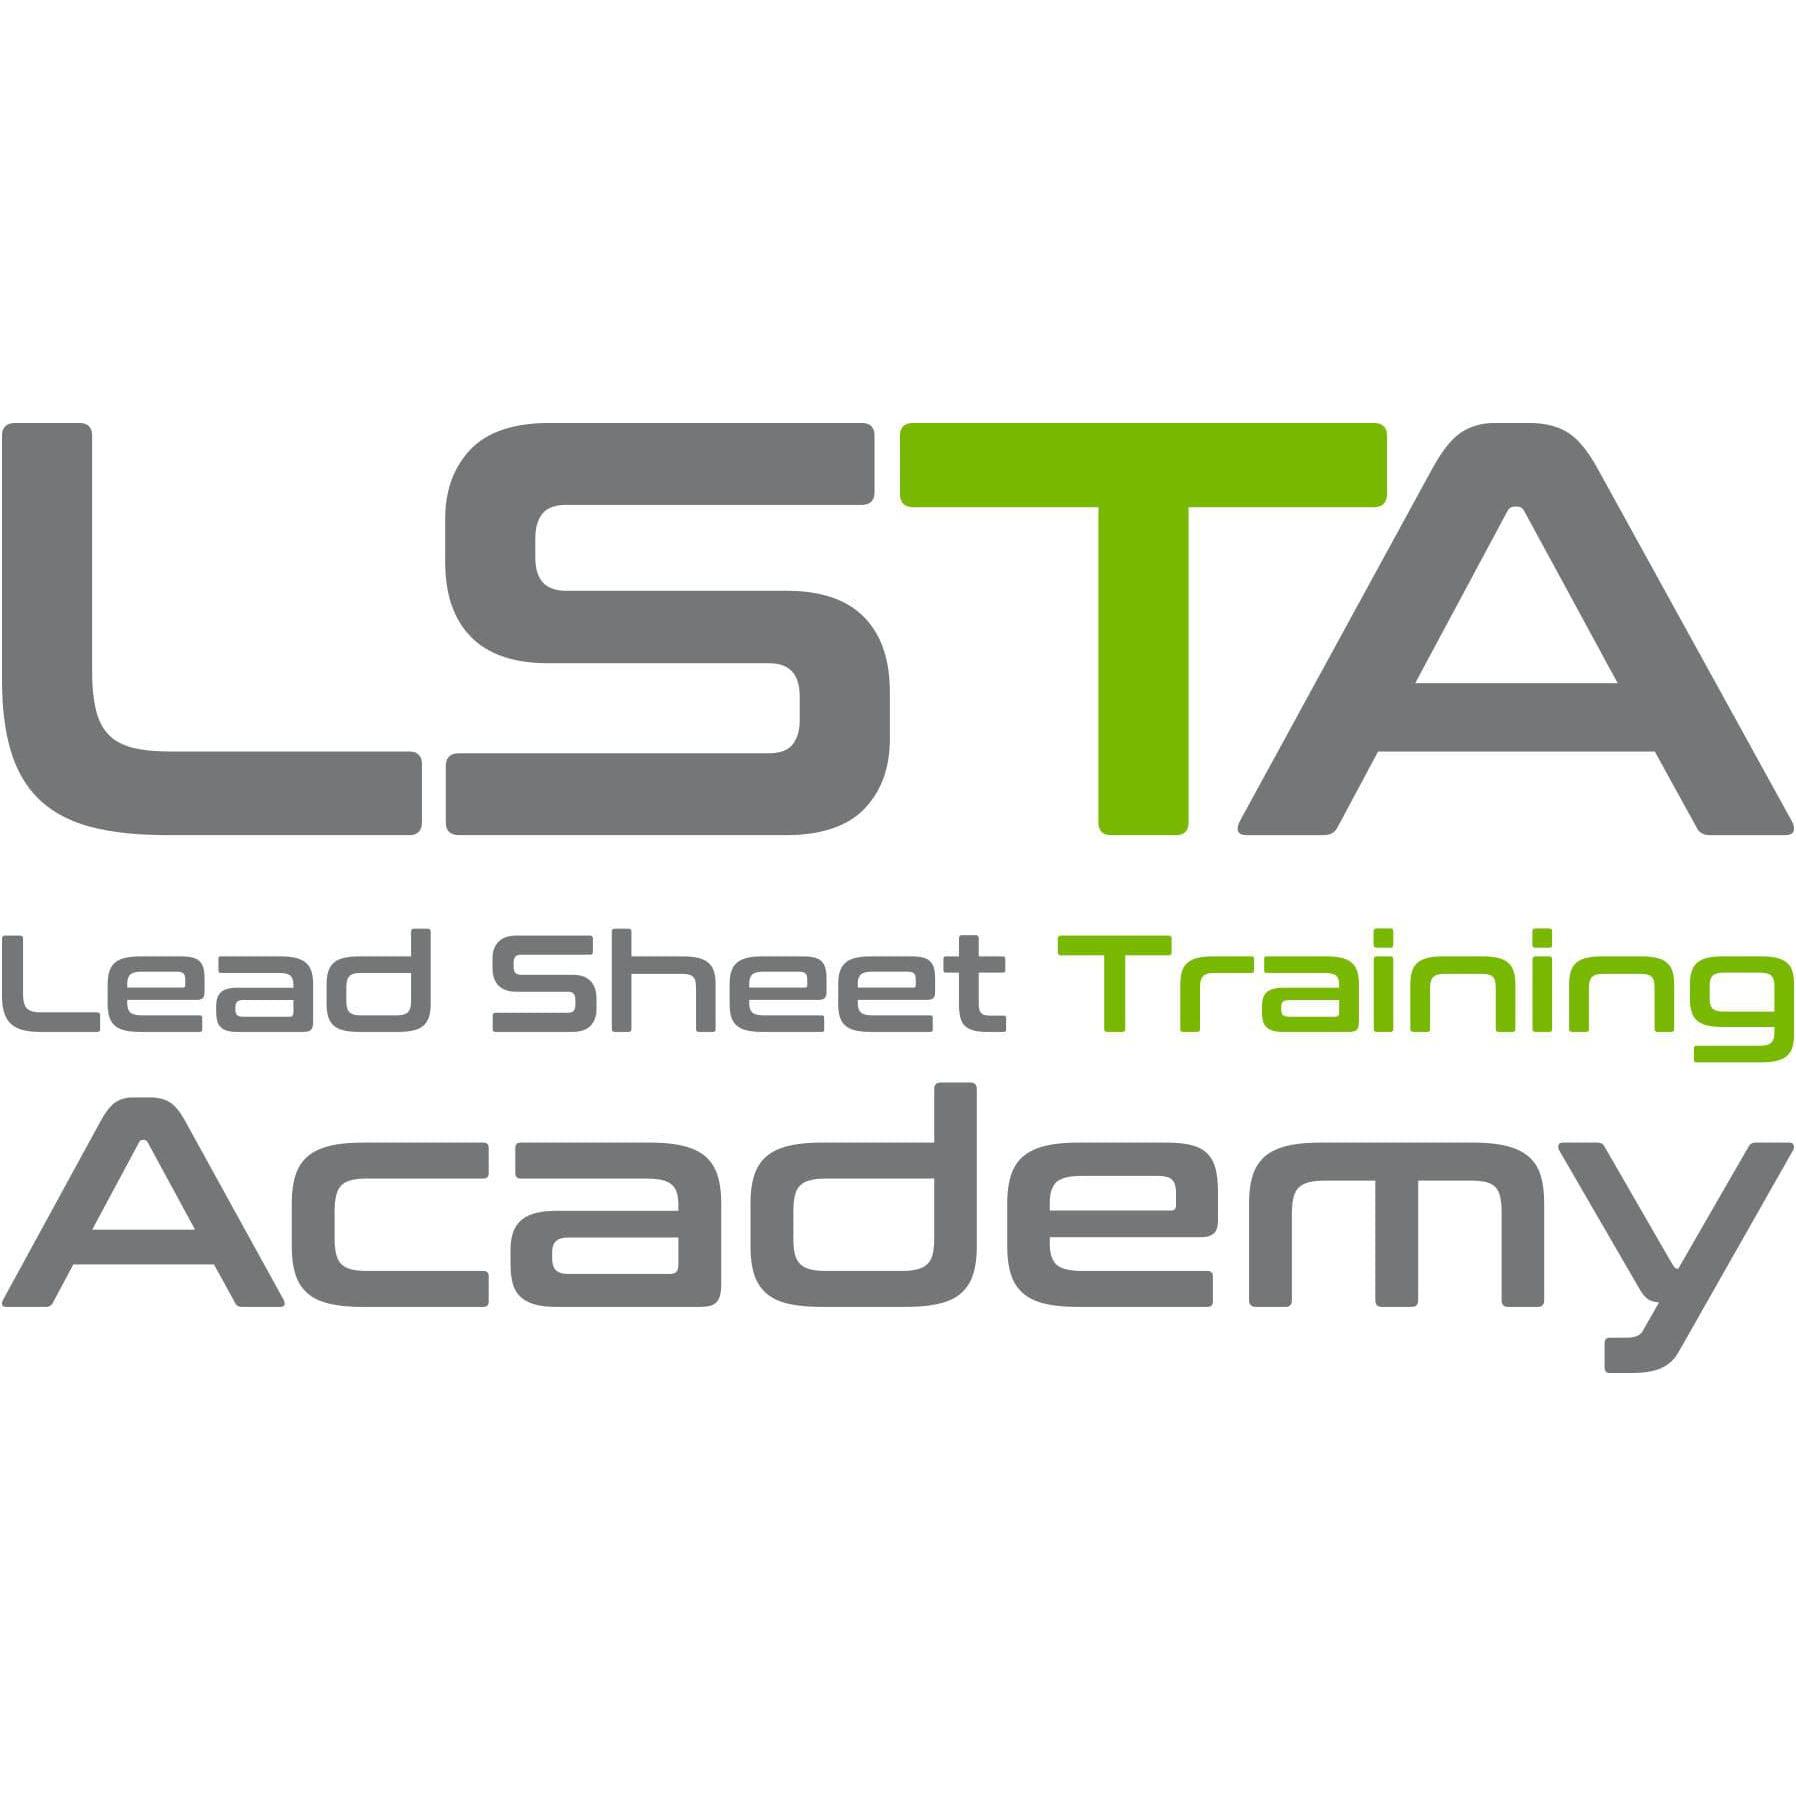 Lead Sheet Training Academy Ltd - Tonbridge, Kent - 01622 872432 | ShowMeLocal.com